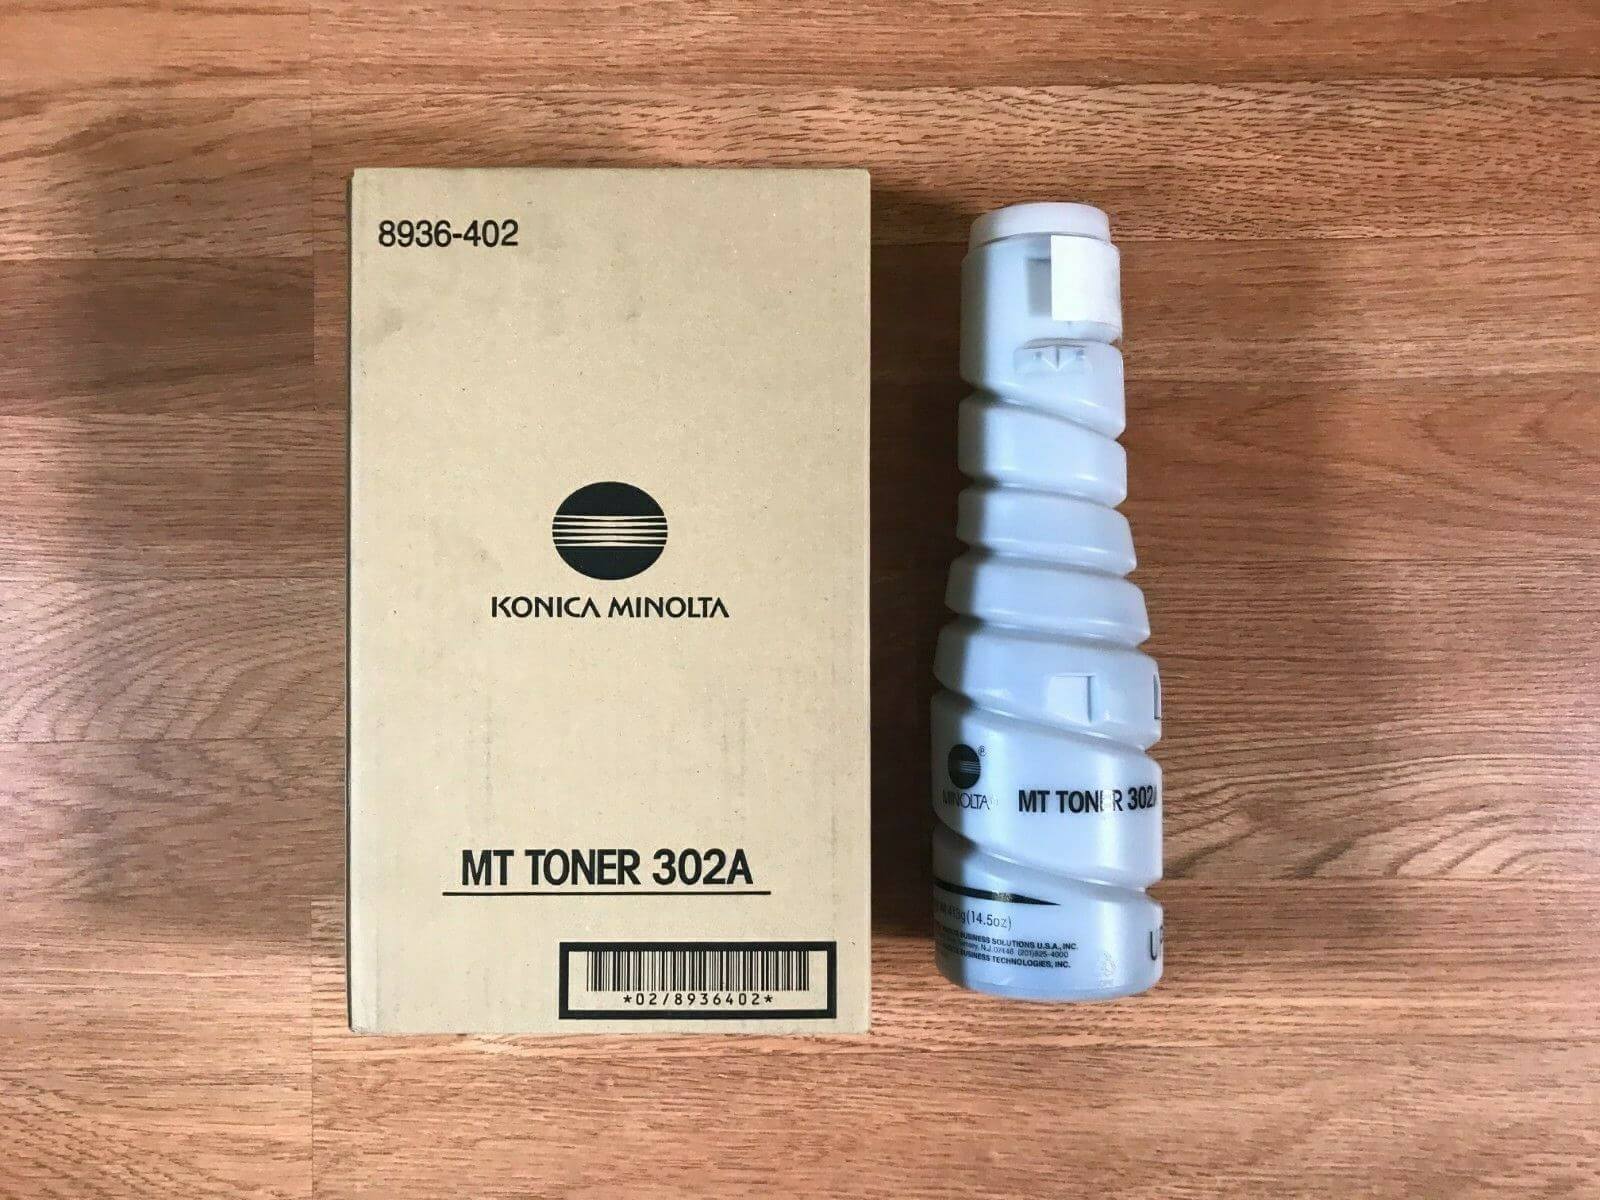 Konica Minolta 8936-402 MT Toner 302A Black (3 Bottles) Same Day Shipping!! - copier-clearance-center